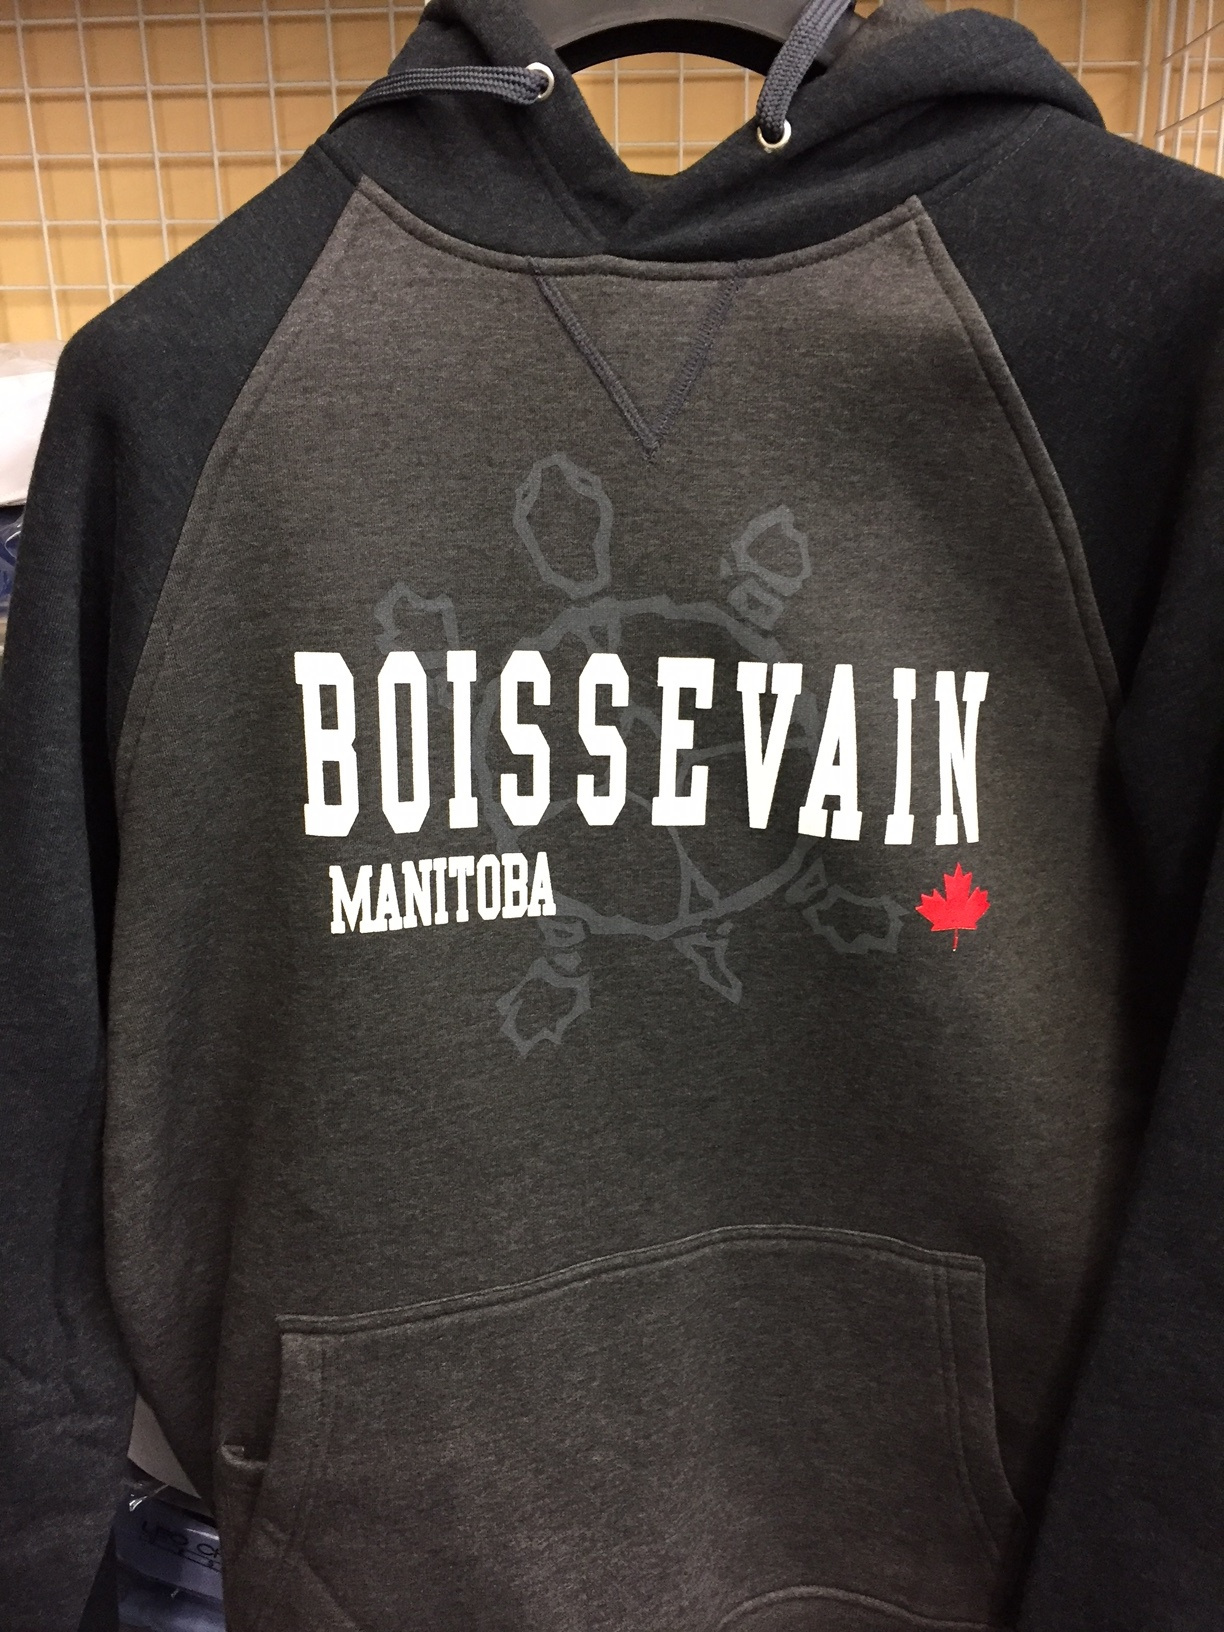 https://0901.nccdn.net/4_2/000/000/038/2d3/Boissevain-vintage-hoodies-new-logo-1224x1632.jpg